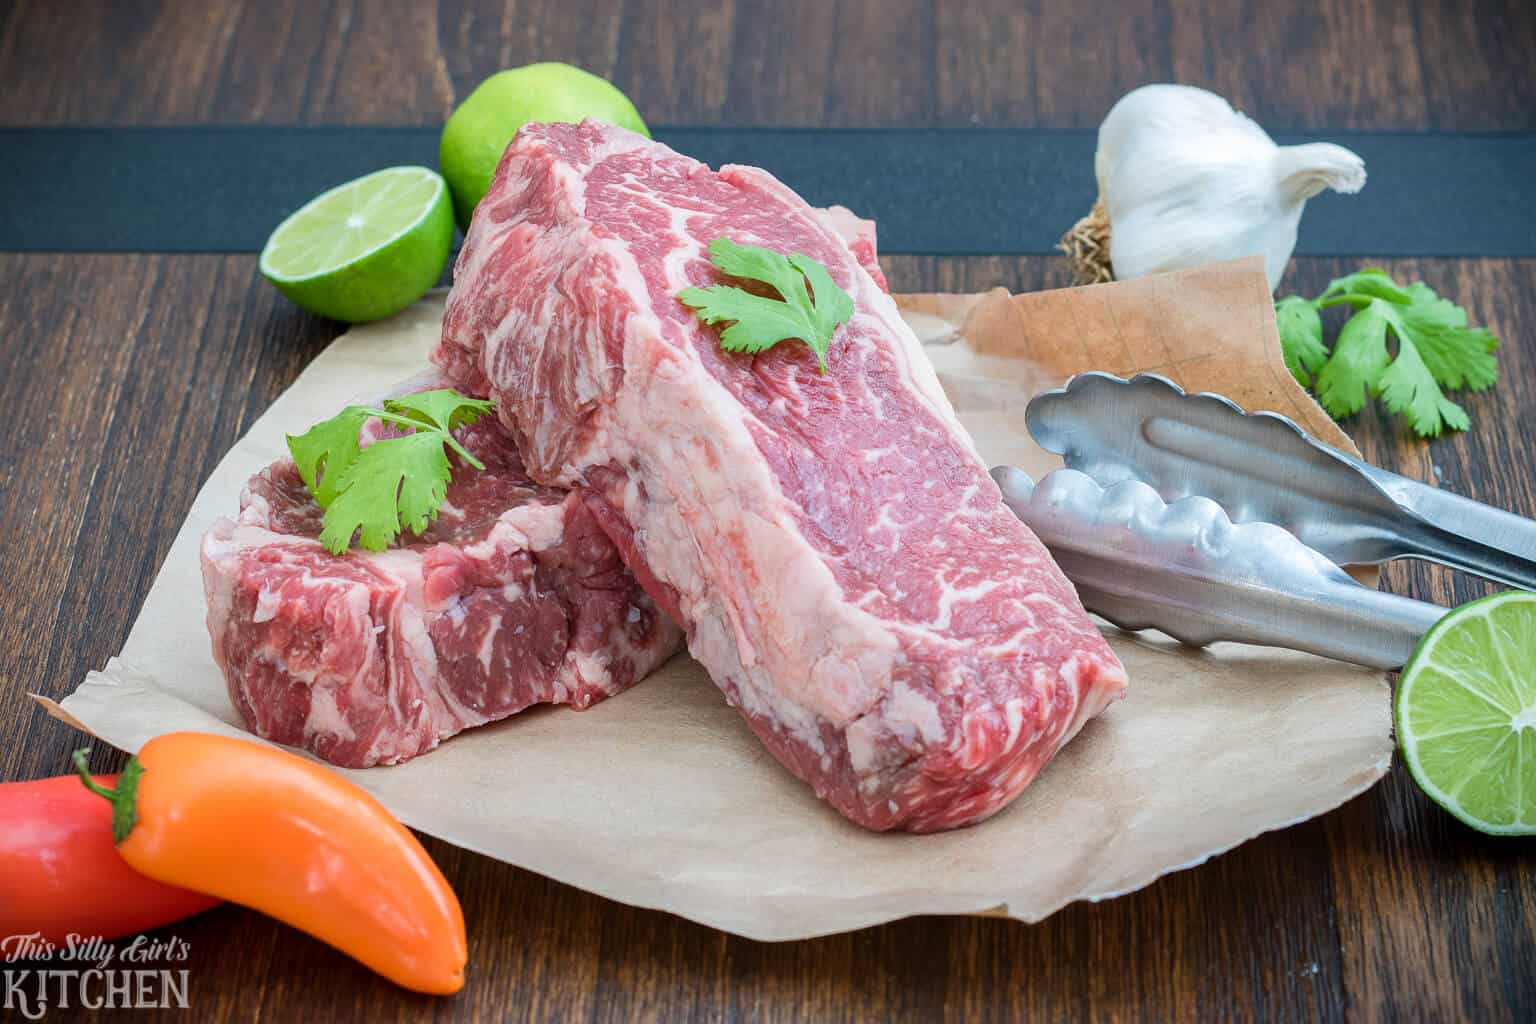 Partial ingredients needed to make Steak Kabobs